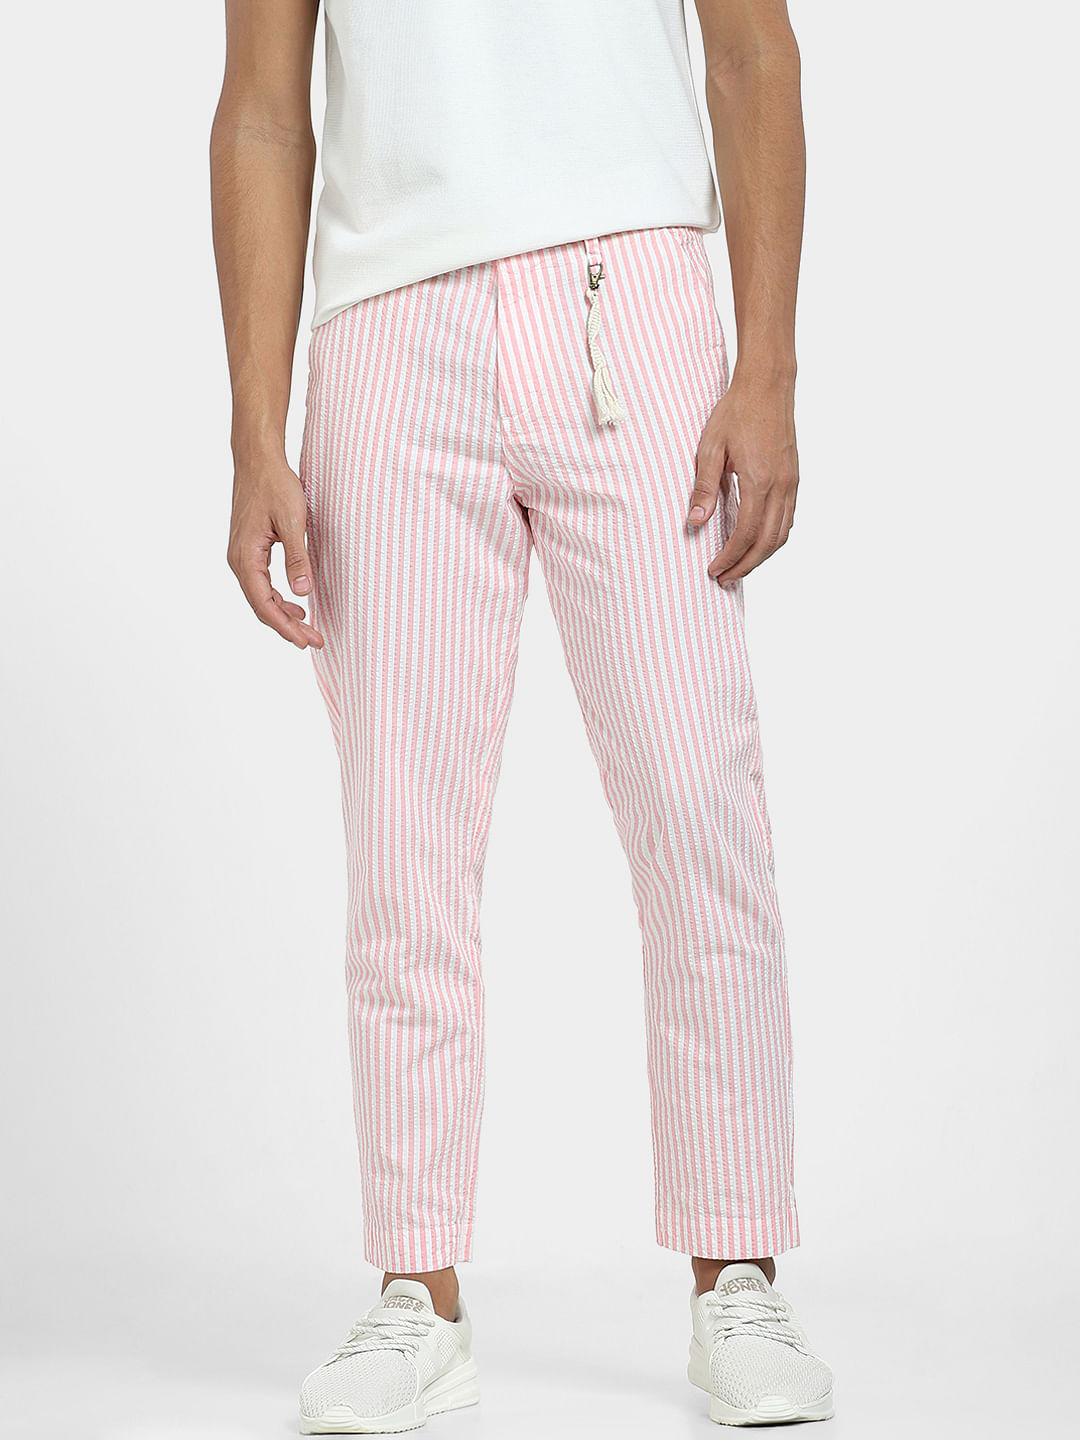 Fashion Men's Slim Fit Stripe Trousers Formal Casual Skinny Long Pants |  eBay